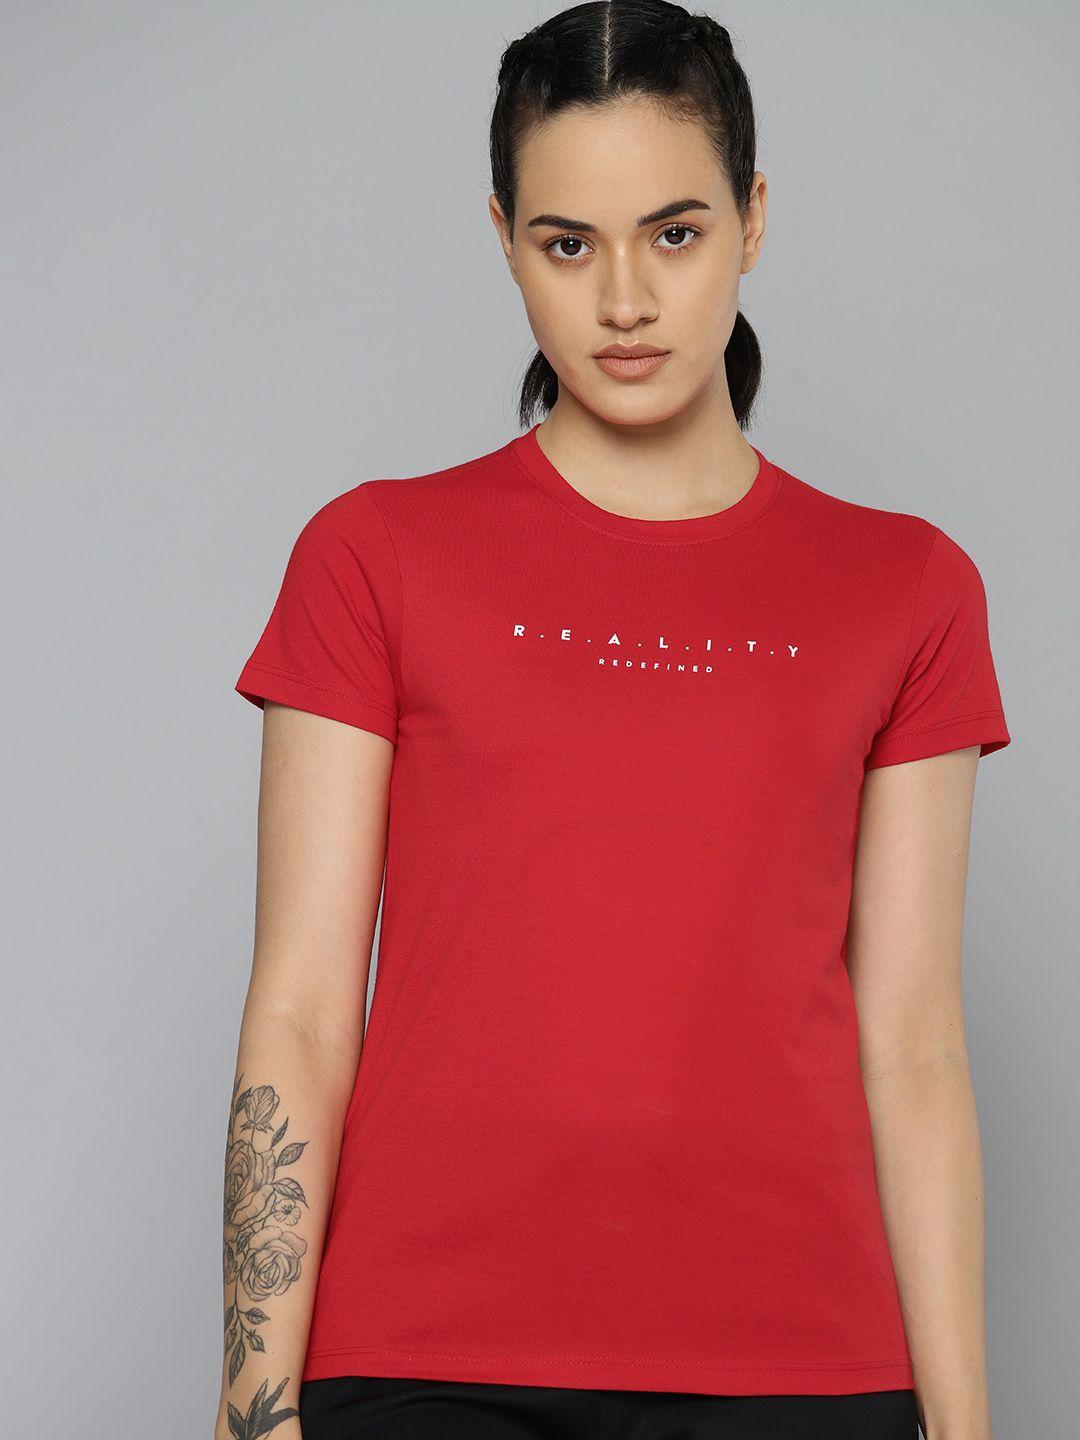 hrx by hrithik roshan women typography printed t-shirt